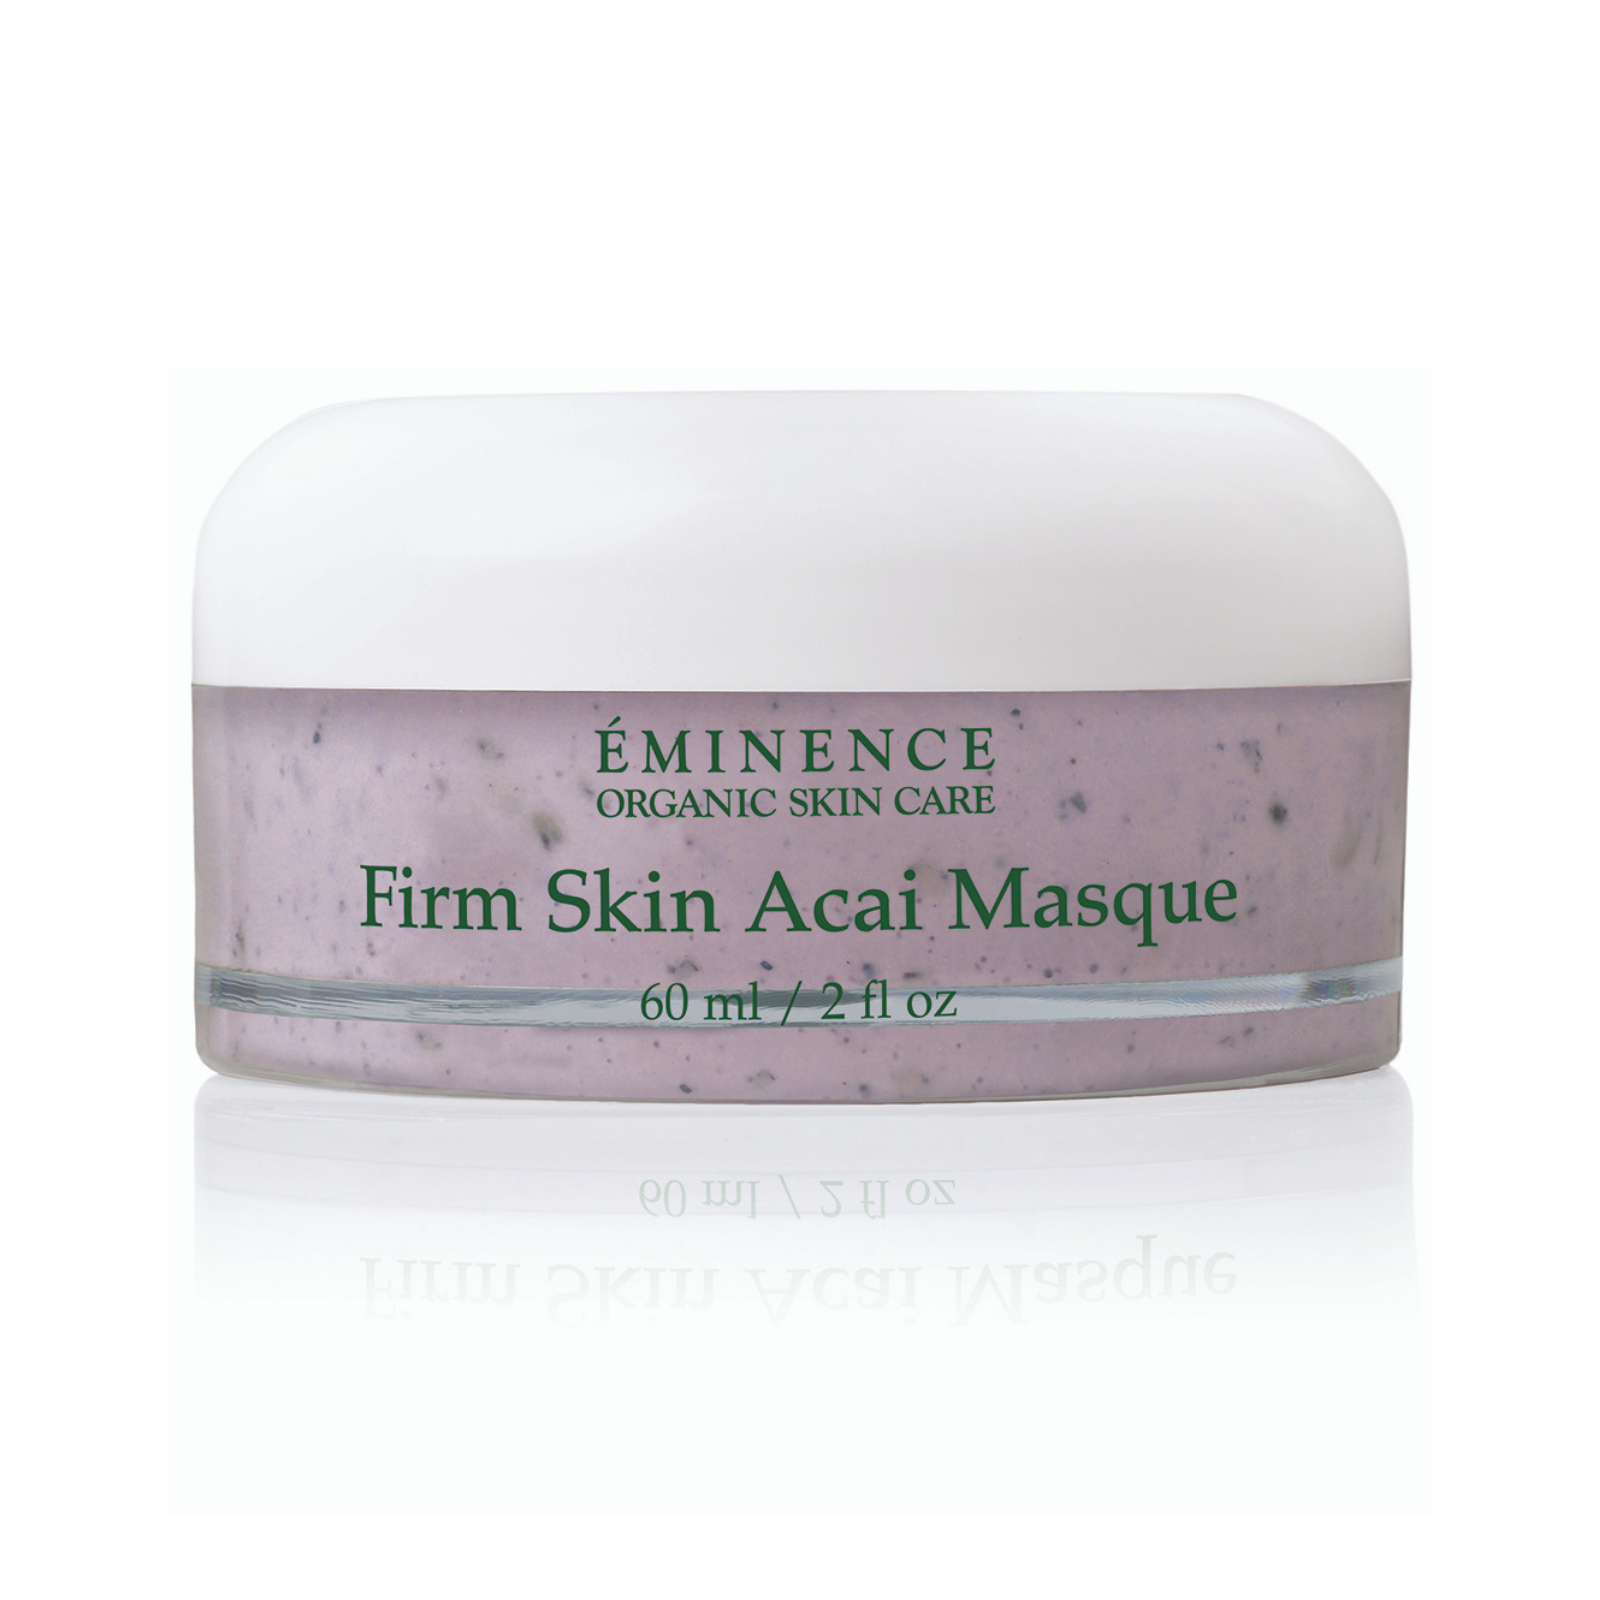 Eminence Firm Skin Acai Masque - 60ml